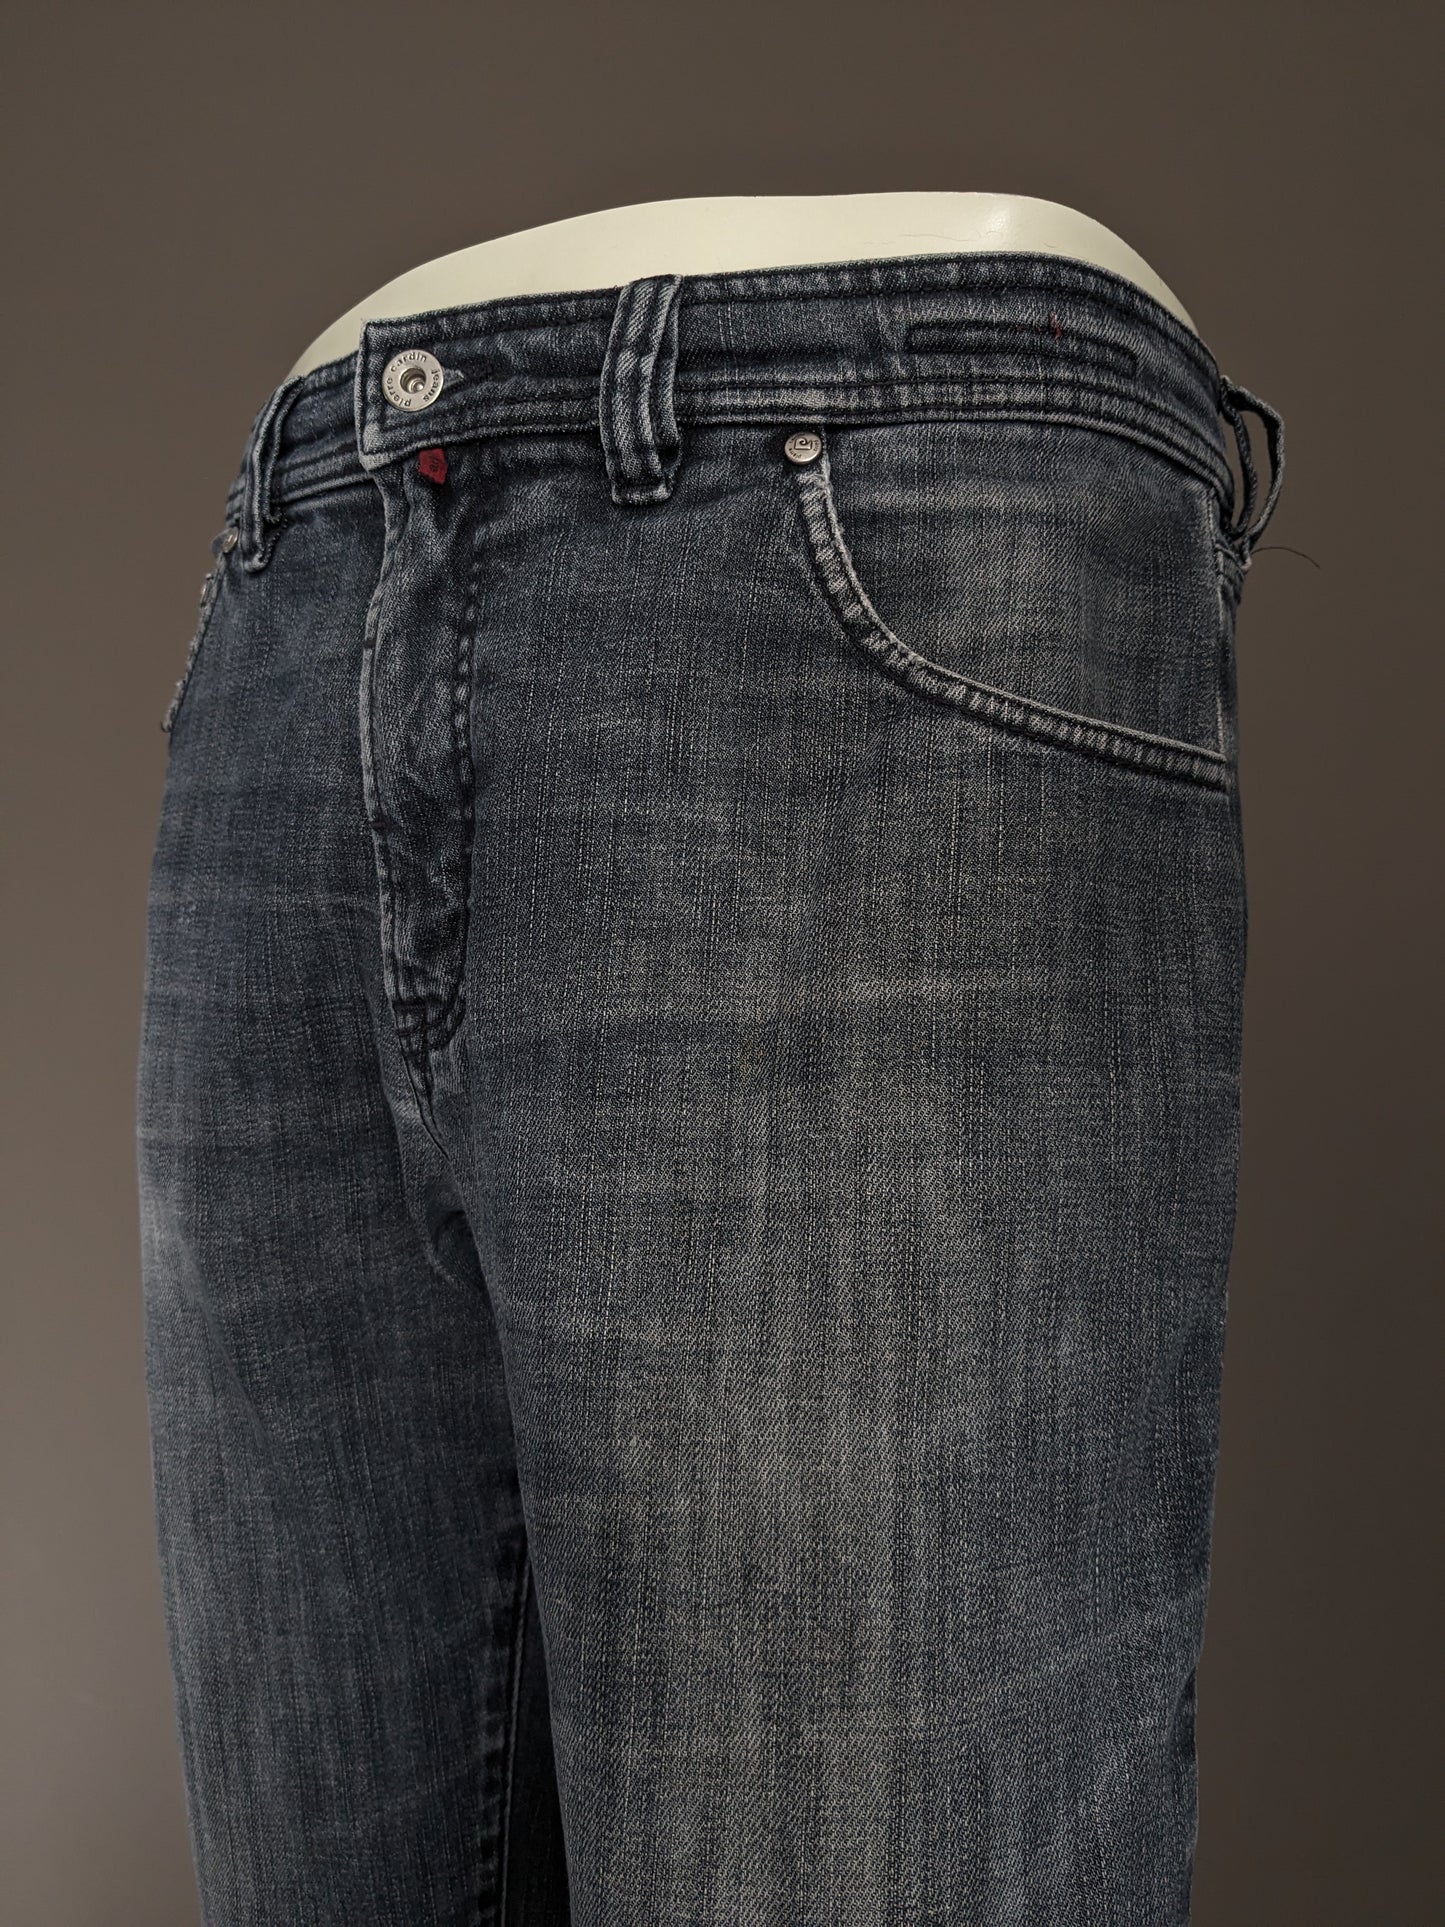 Pierre Cardin Jeans. Color negro de color gris. Tamaño W33 - L30. Escriba mod deauville.